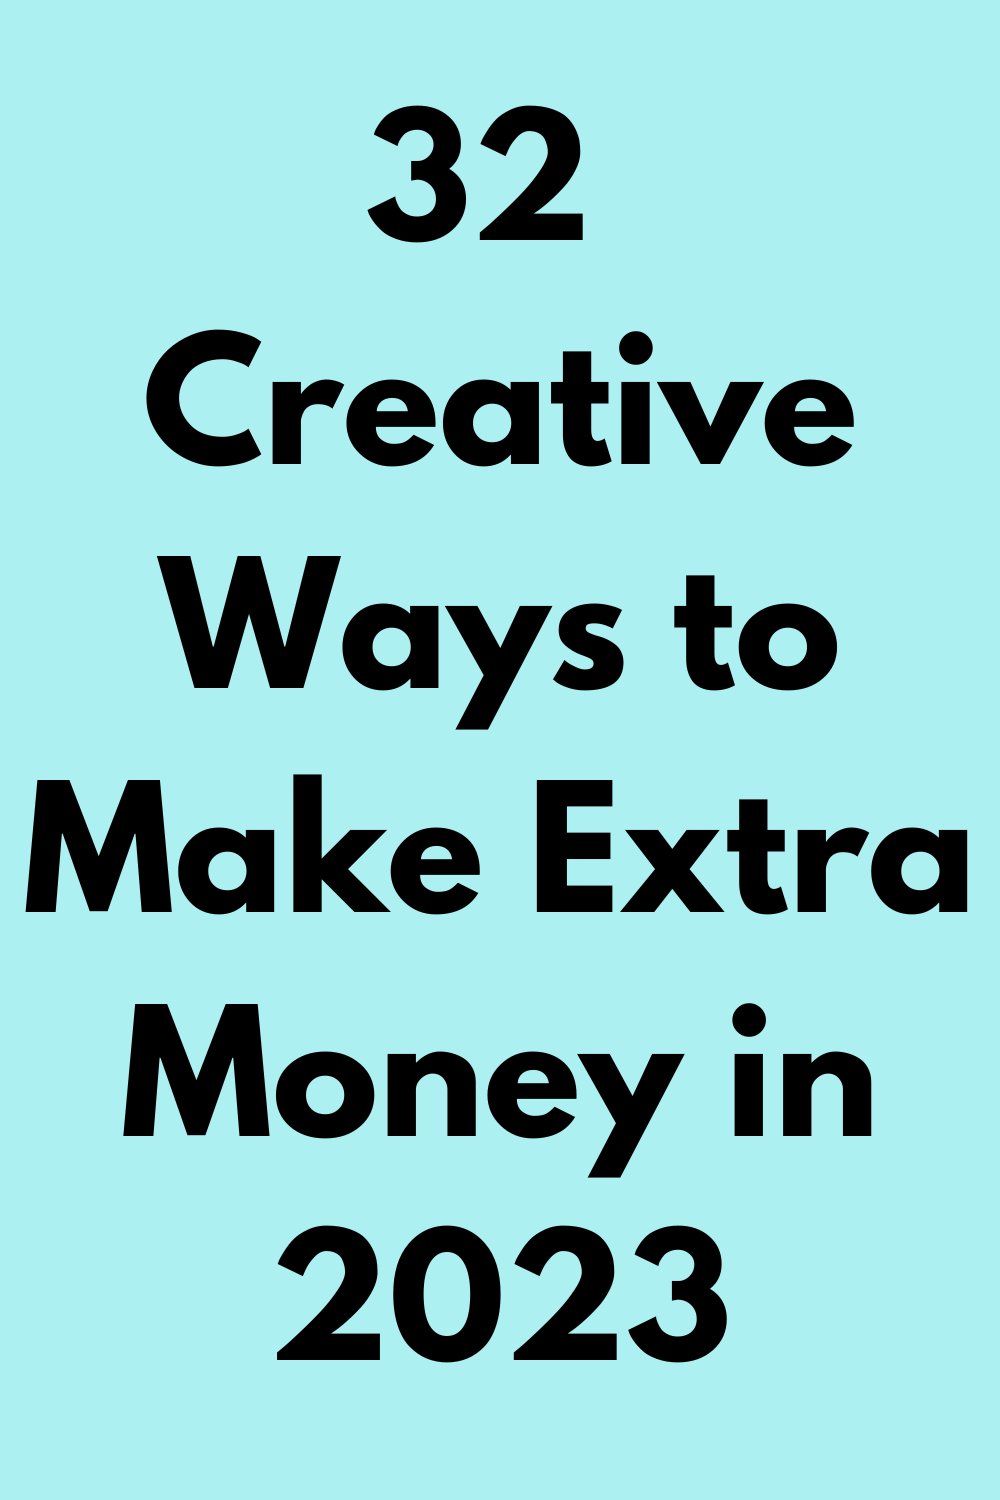 32 Creative Ways to Make Extra Money in 2023